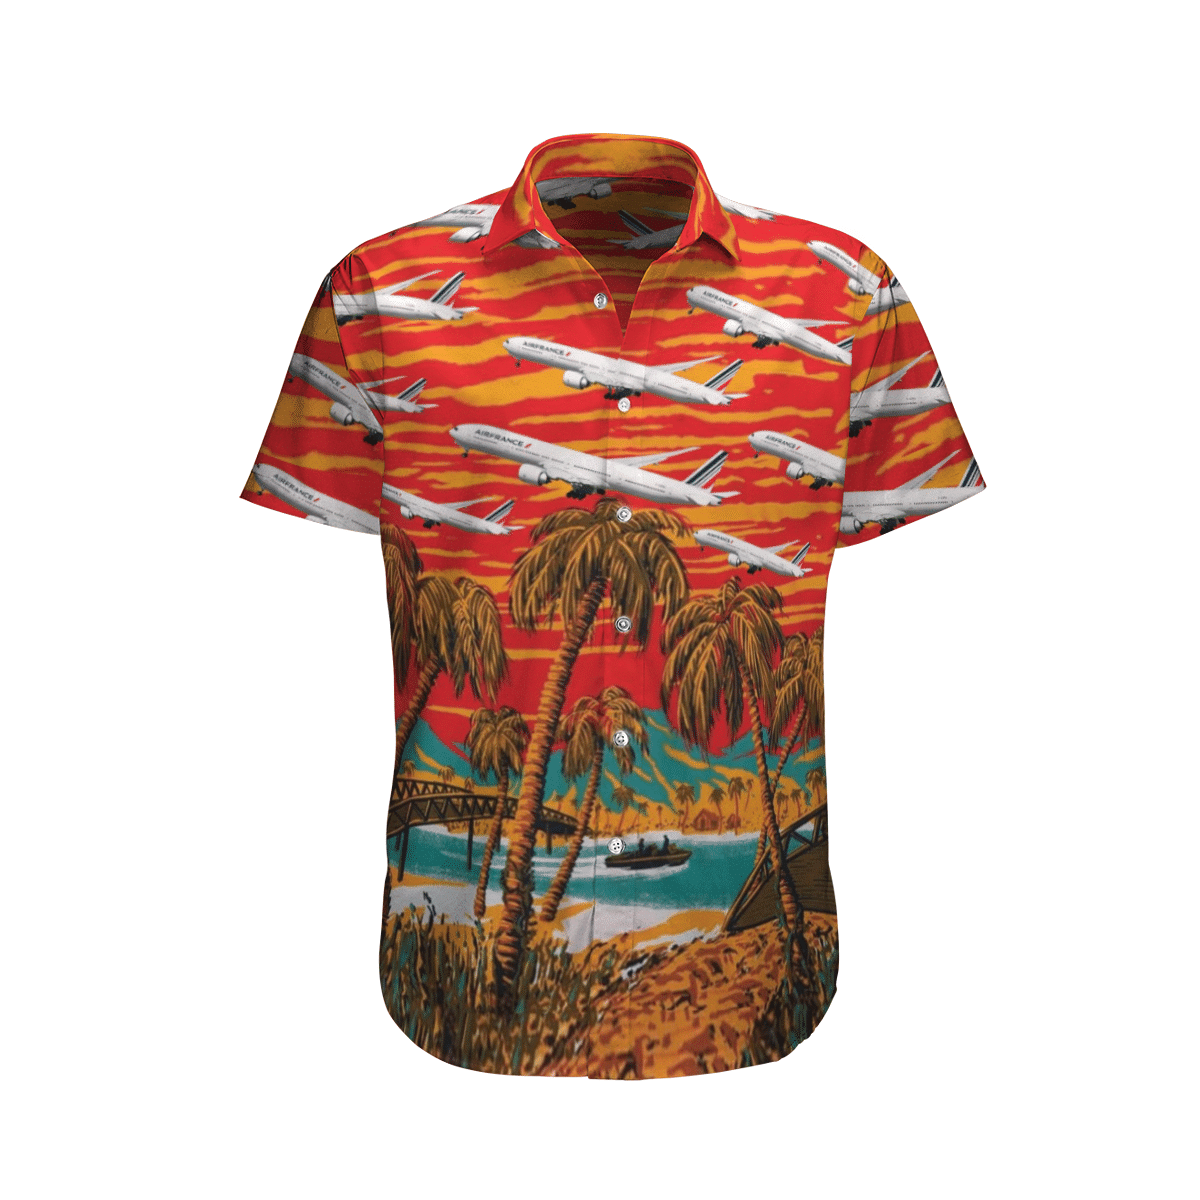 Get a new Hawaiian shirt to enjoy summer vacation 56